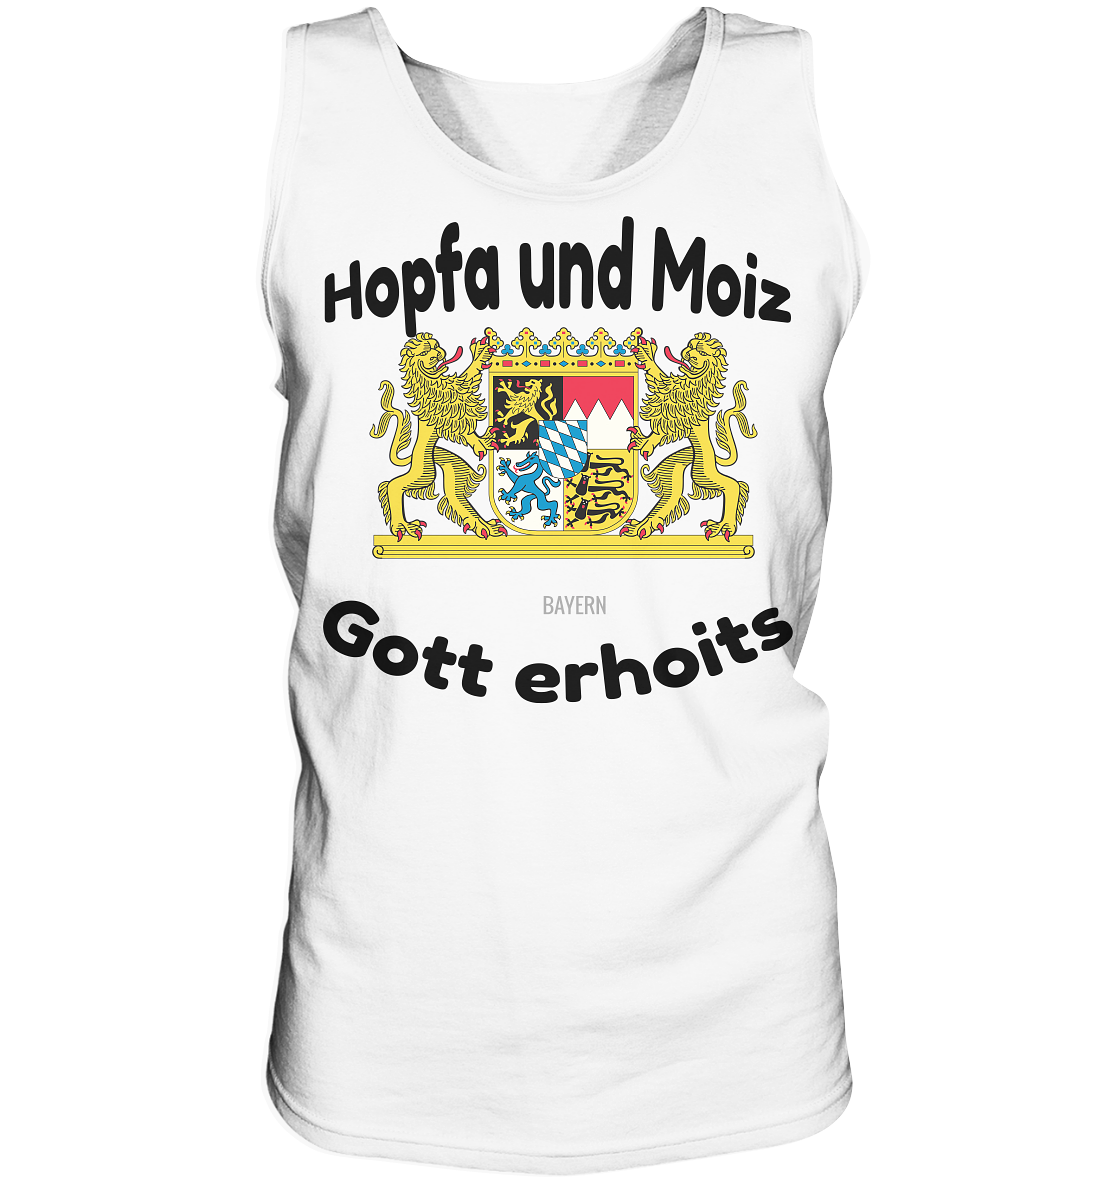 Hopfa and Moiz God erhoits - tank top